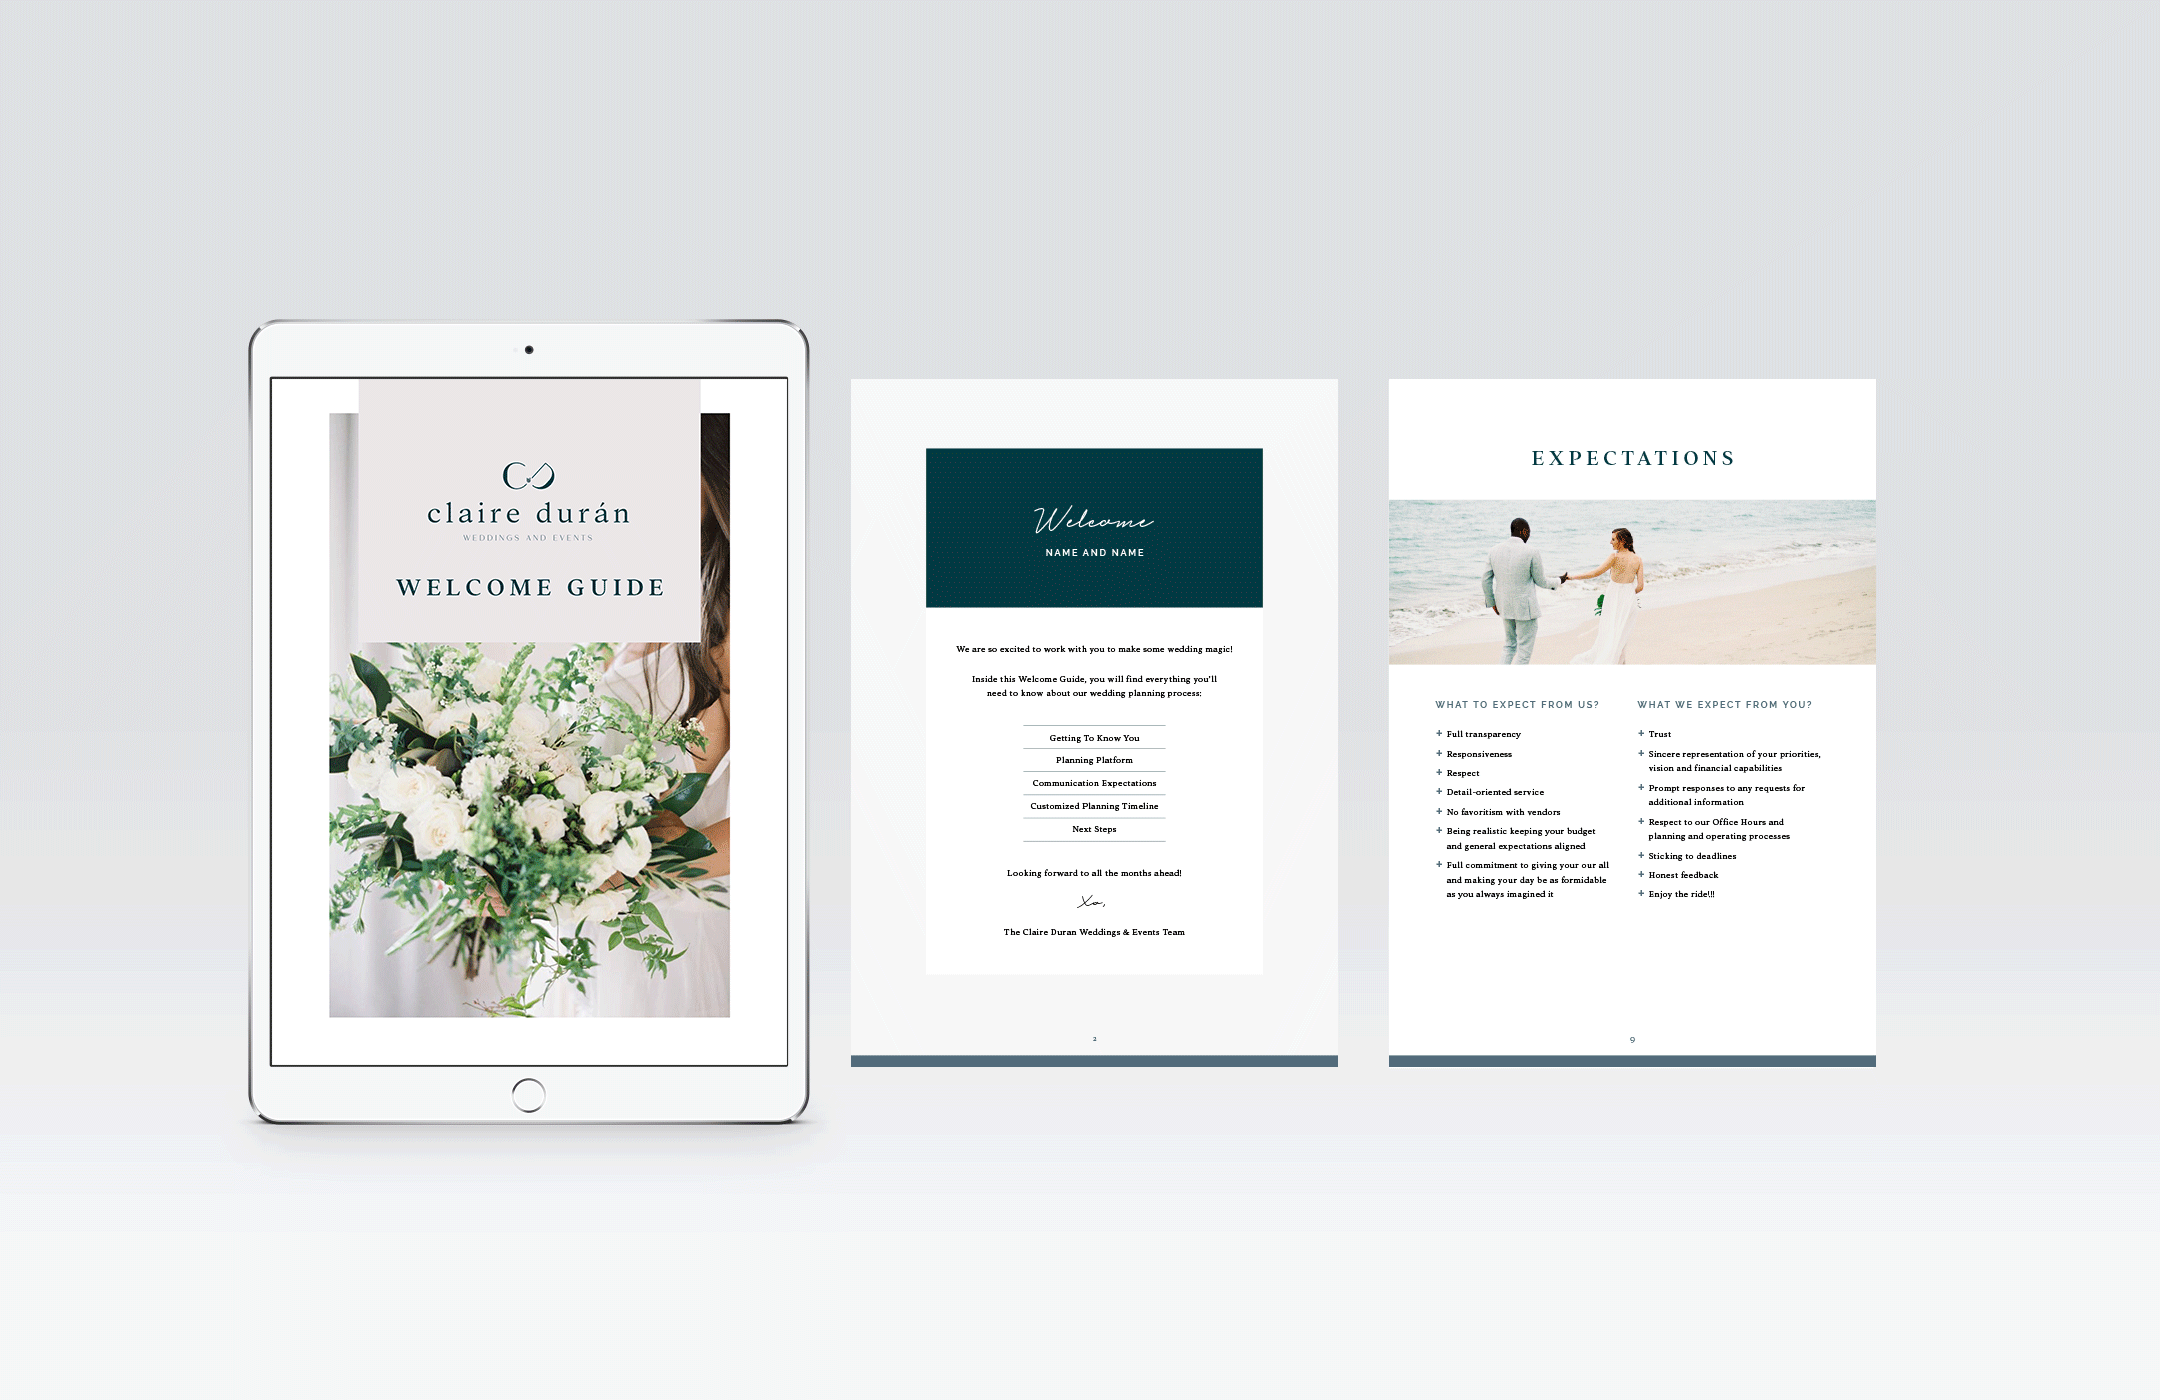 claire duran welcome guide ebook design